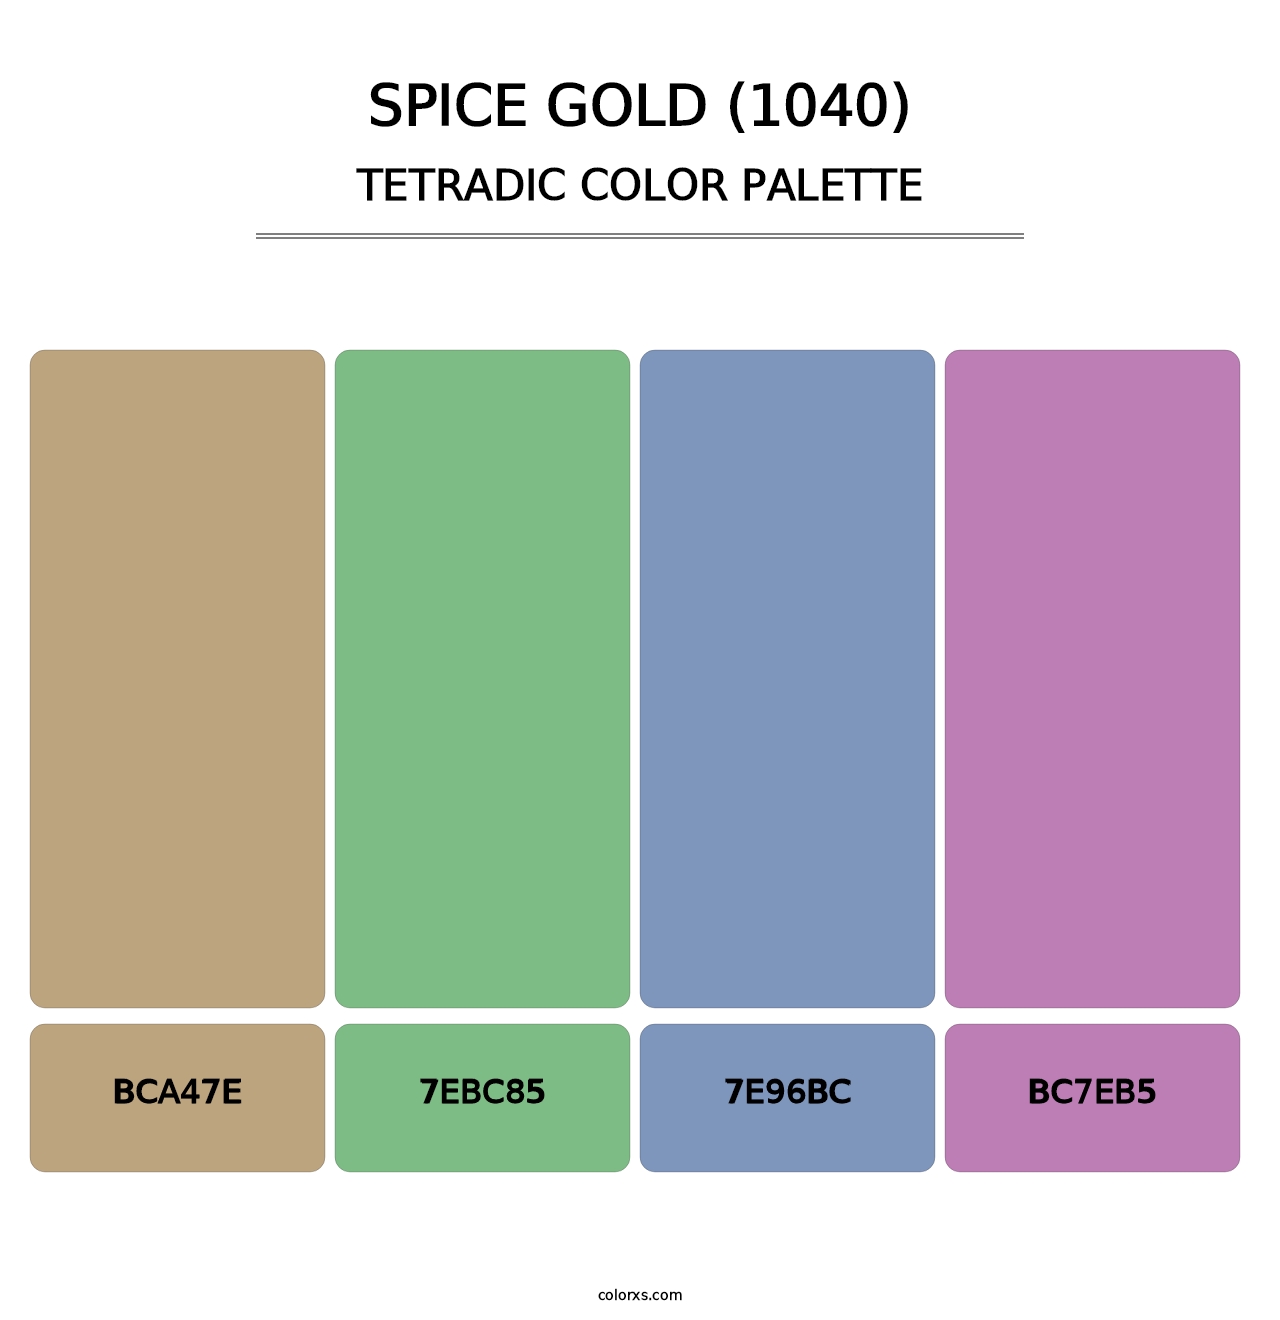 Spice Gold (1040) - Tetradic Color Palette